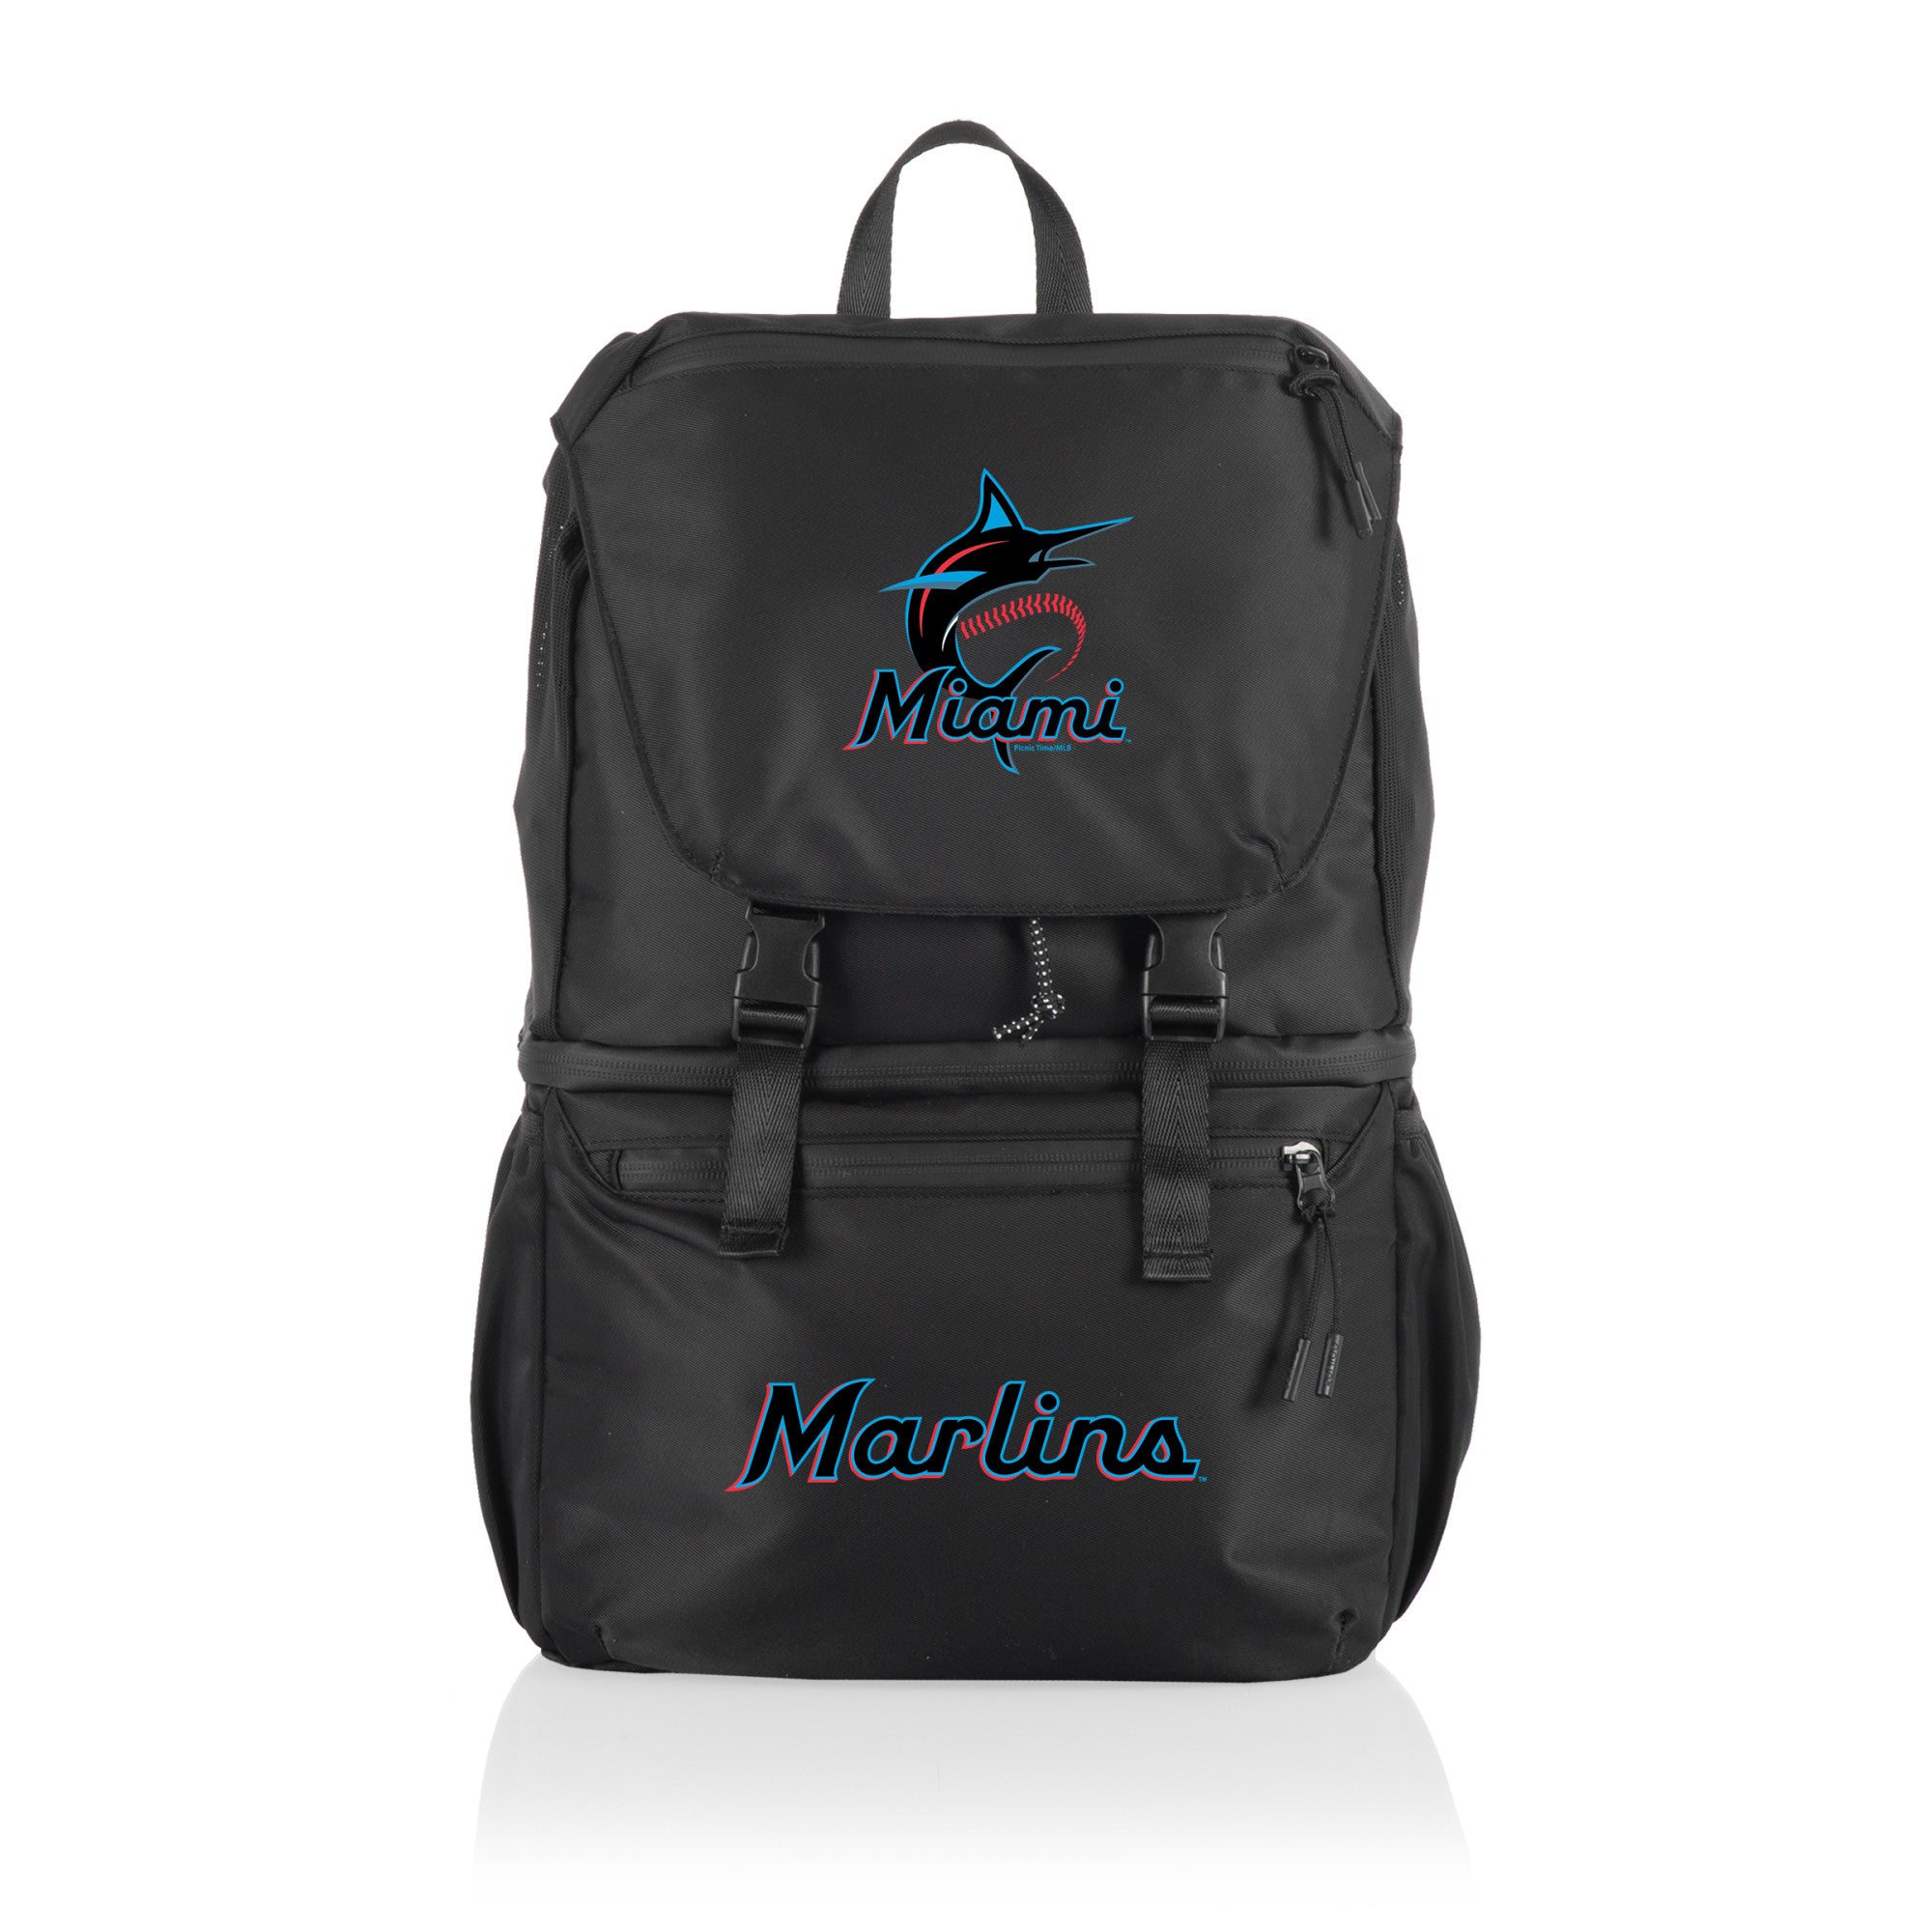 Miami Marlins - Tarana Backpack Cooler